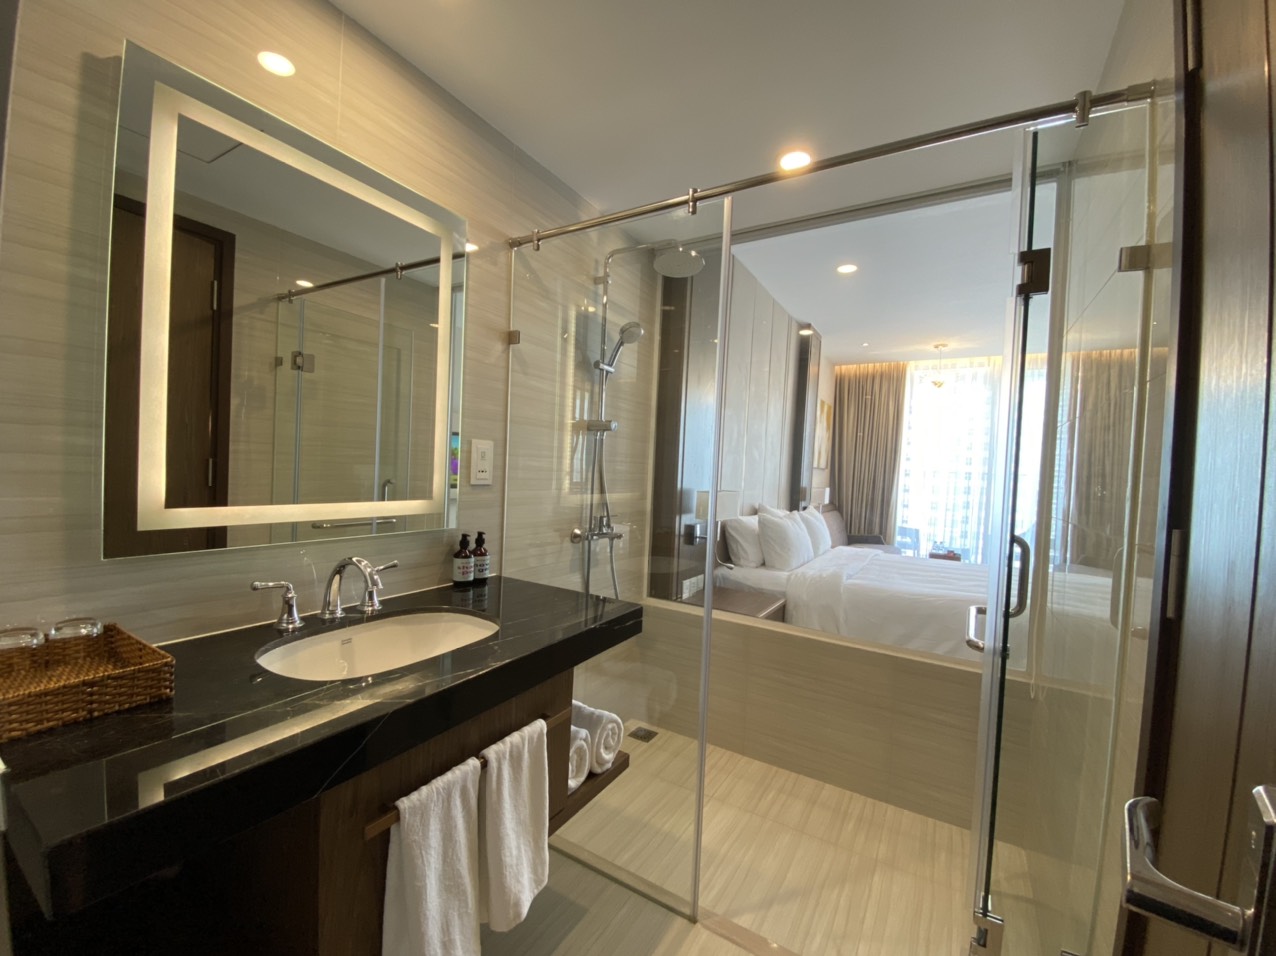 Panorama Nha Trang for rent | Cityview | no Bathtub | 9.5 million VND